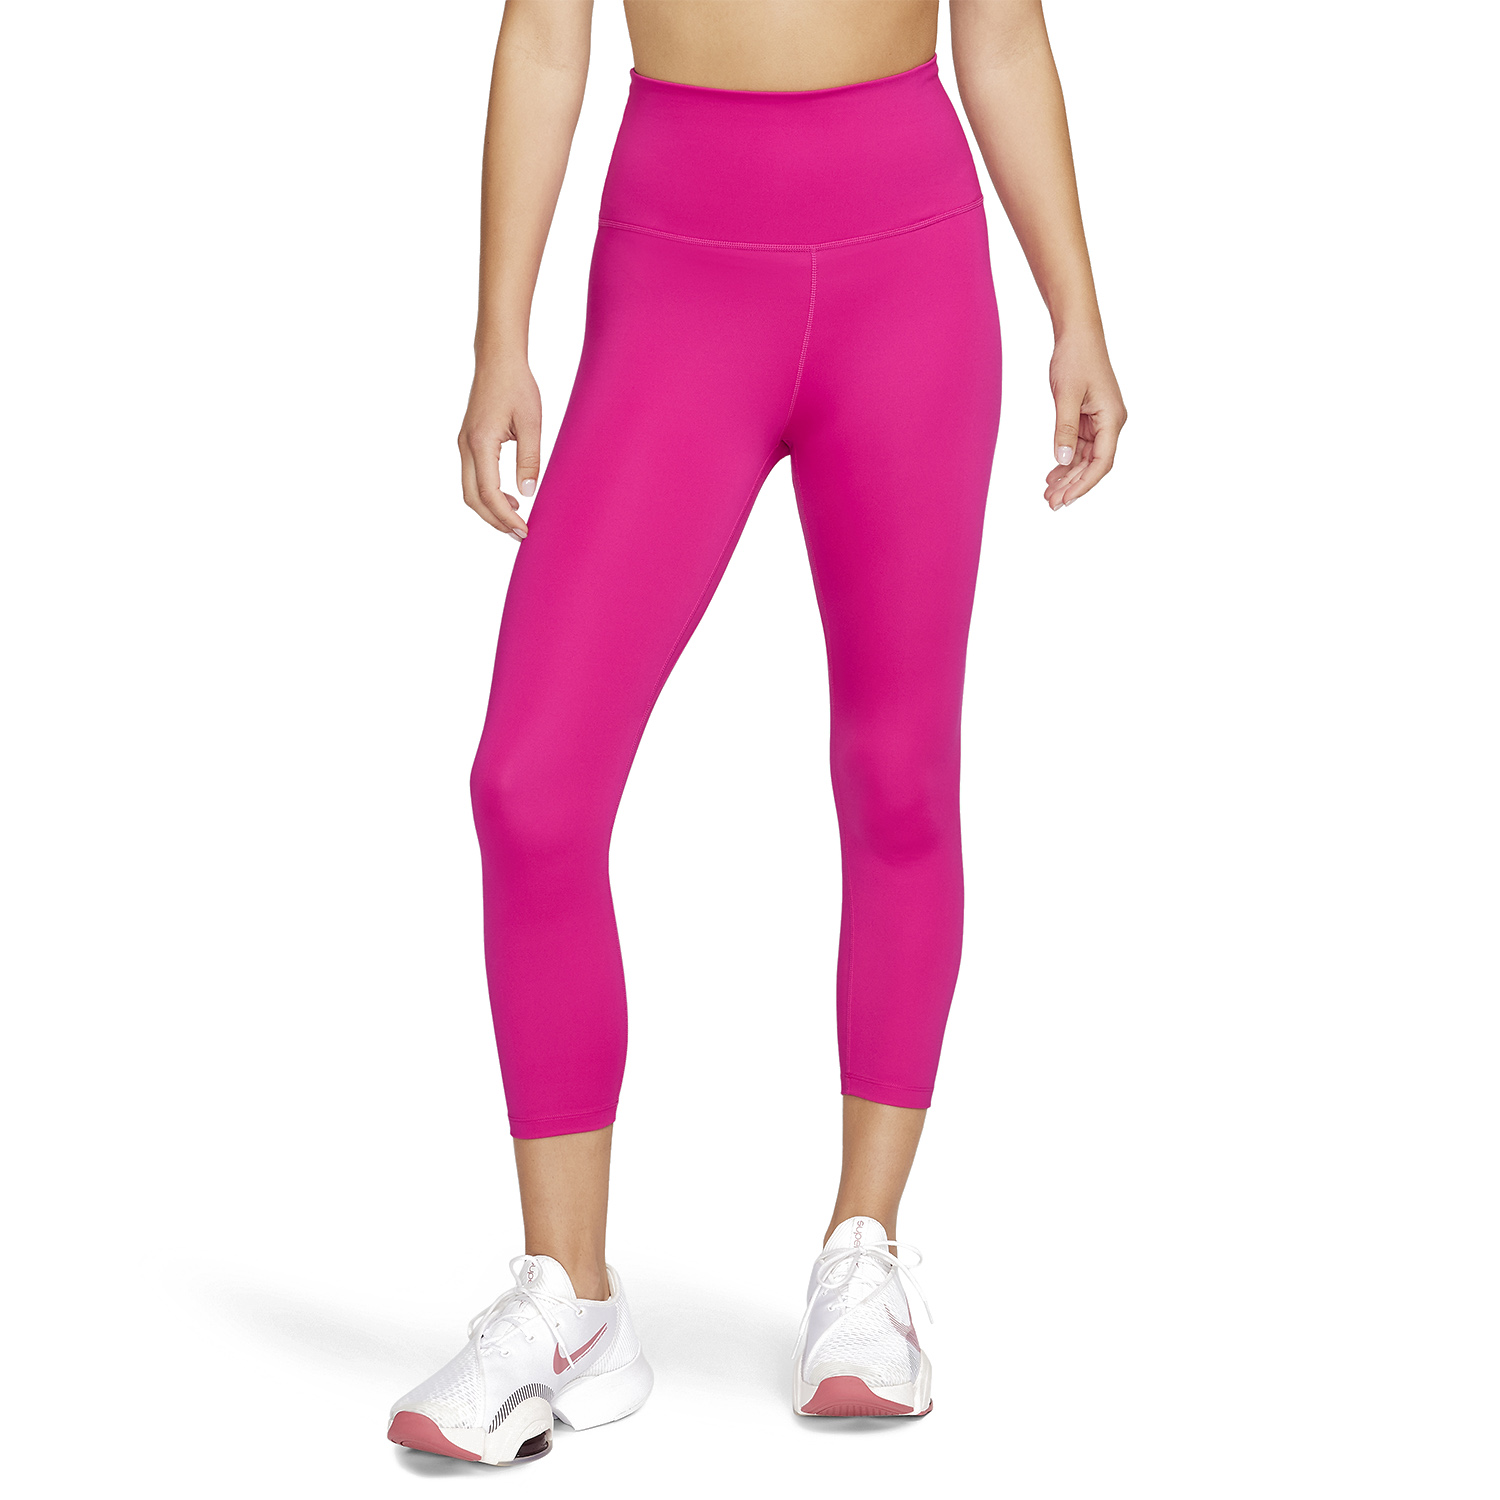 Buy Nike Women's Pro Warm 7/8 Training Tights (Light Cream, X-Large) at